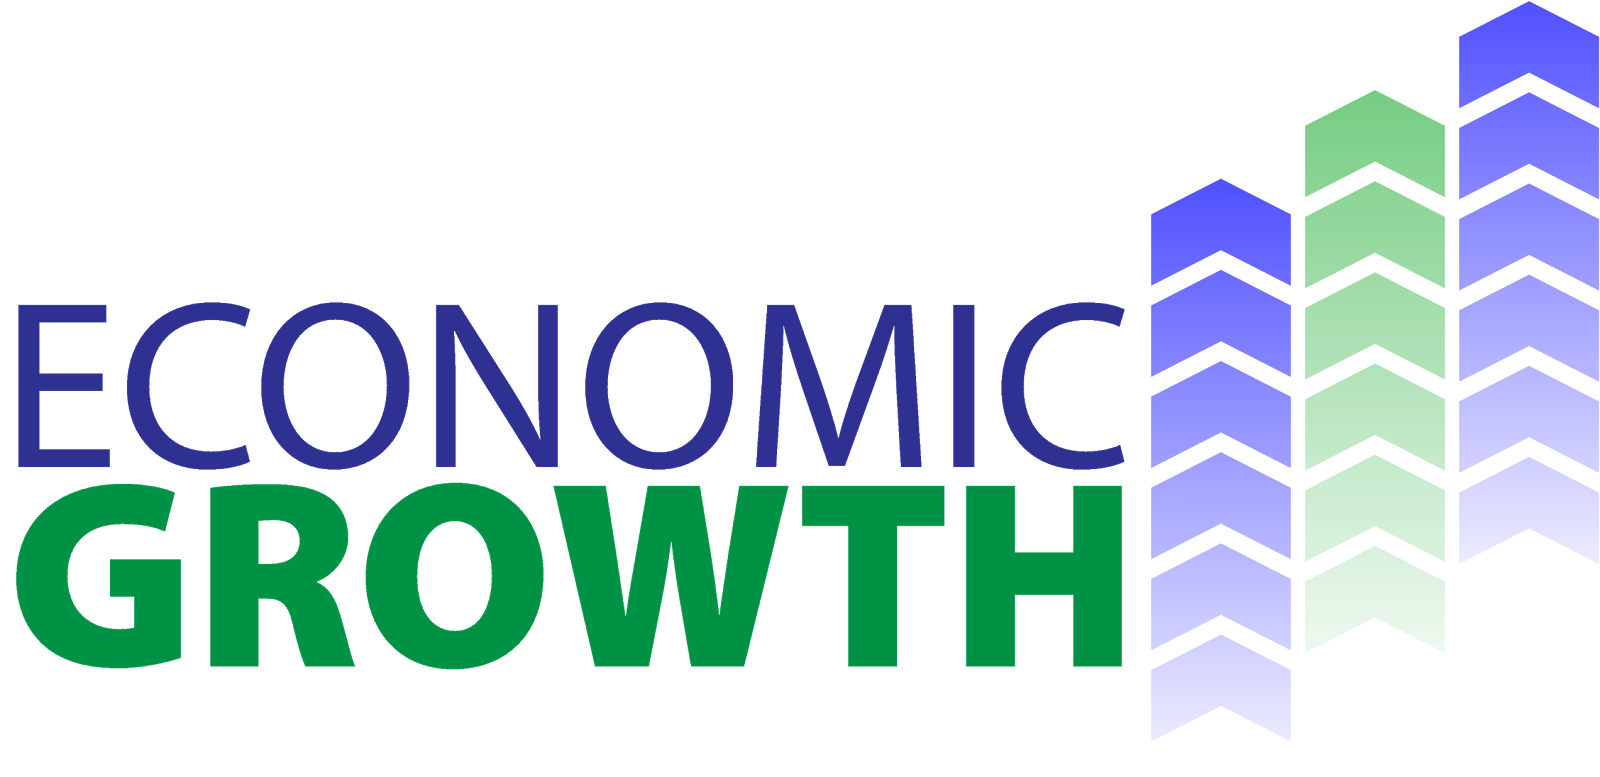 economy clipart economic stability